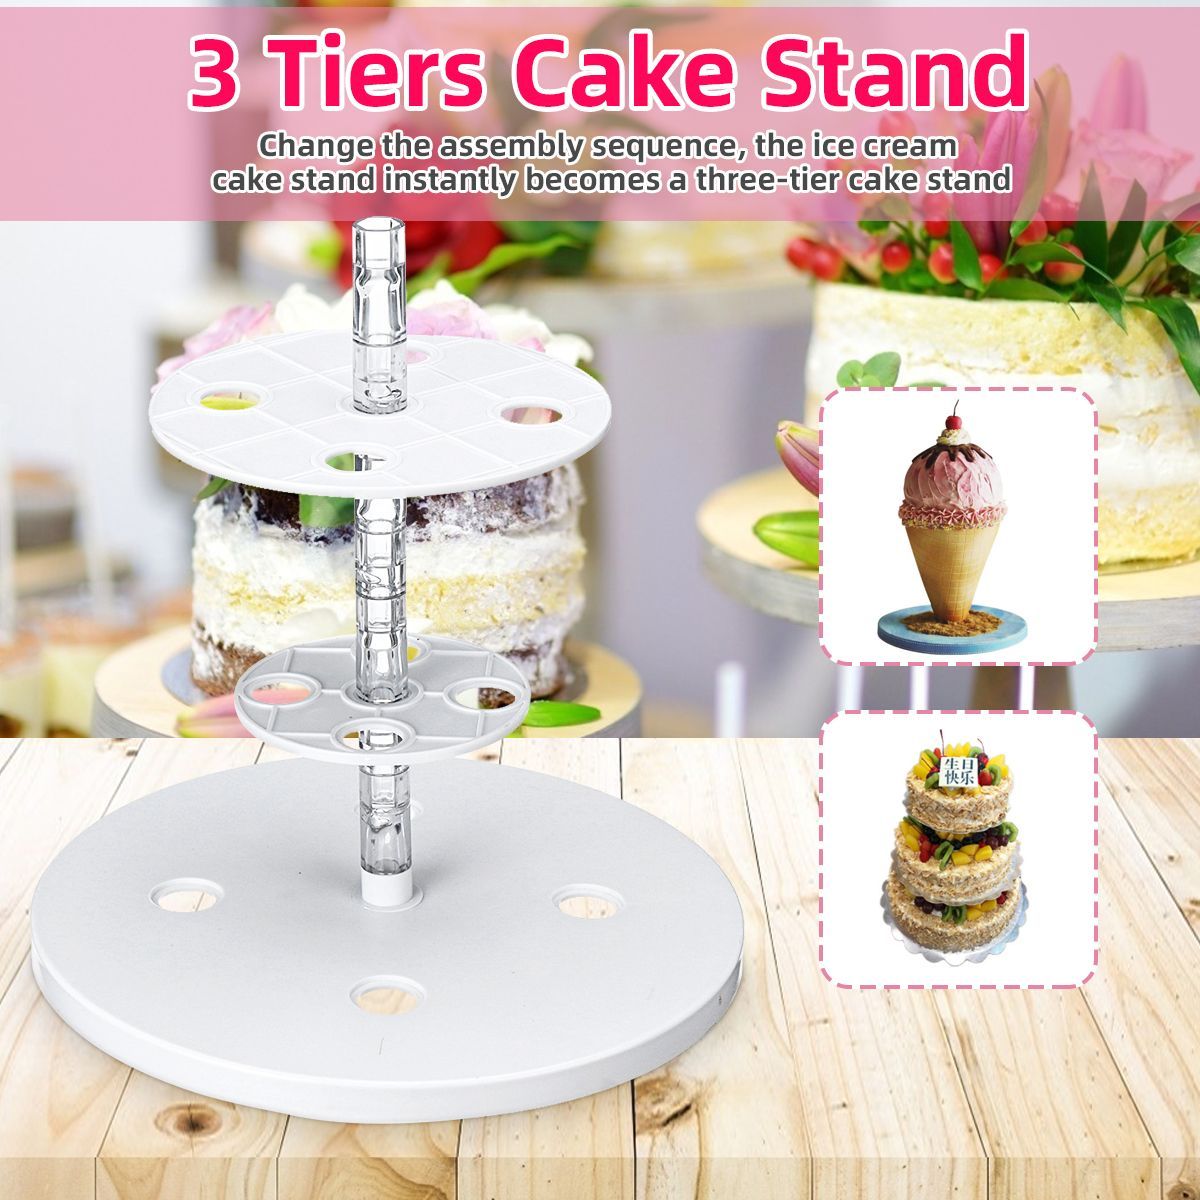 25x27cm-Holder-Ice-Cream-Stand-Cake-Dessert-Display-Plate-Birthday-Weeding-Party-Rack-Holder-1678072